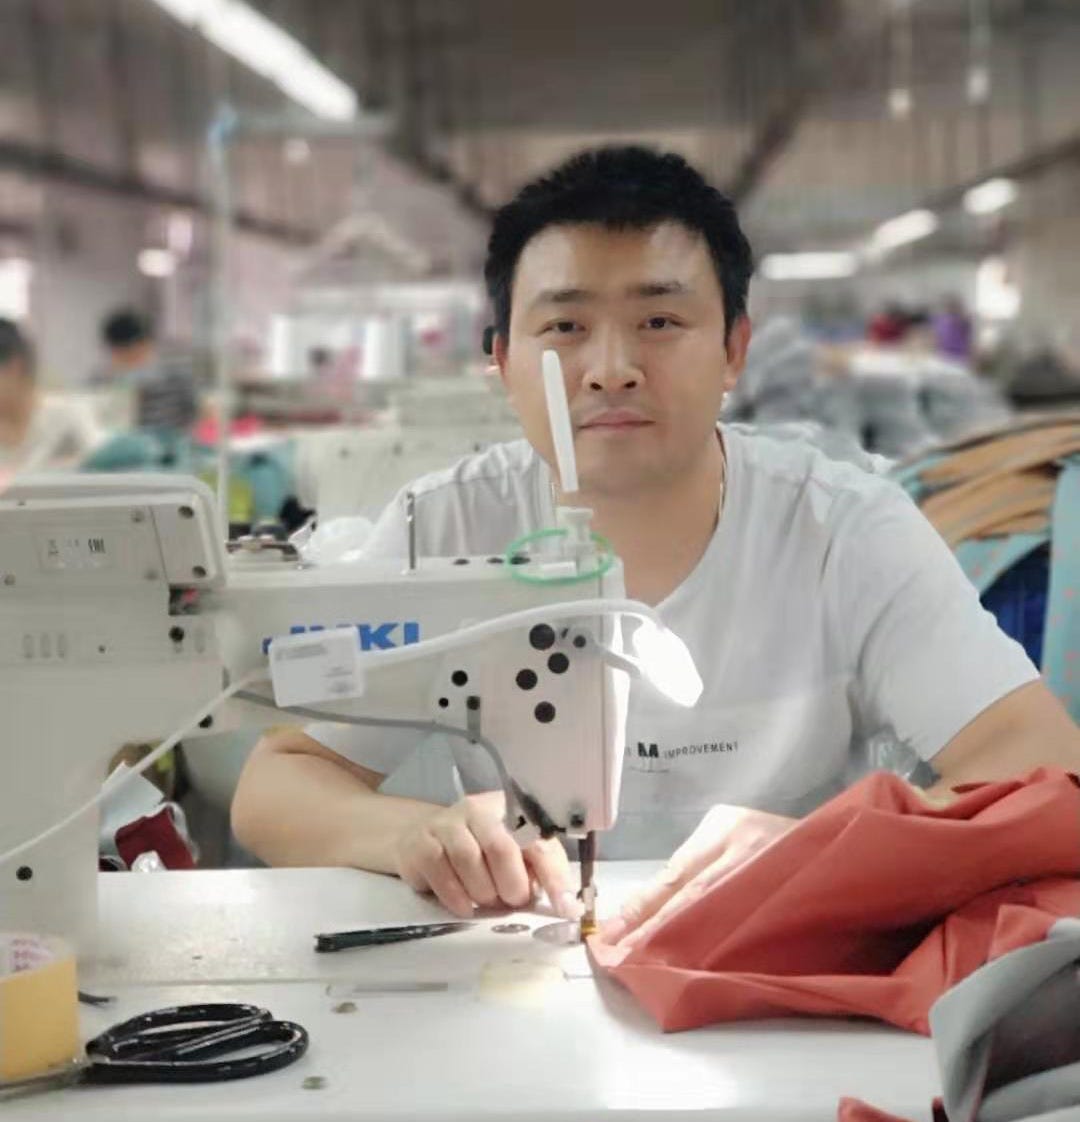 Menneskene bak klærne — møt fabrikkarbeider, Zhang Changpu | by Ida  Kristine Moe | Stormberg | Medium